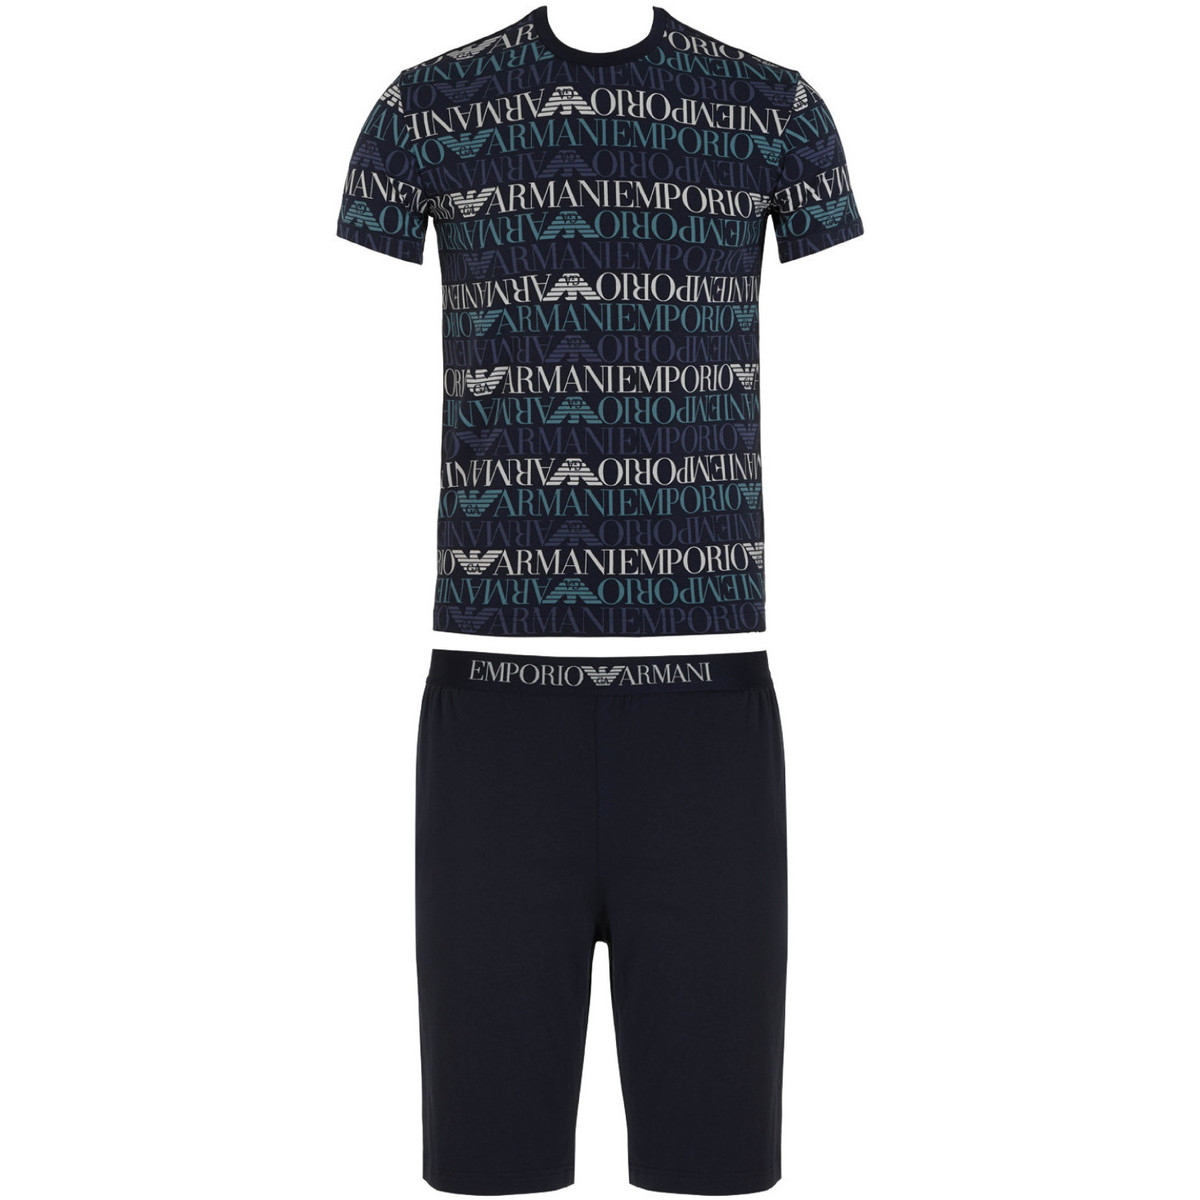 Vêtements Homme Emporio sole Armani Pyjama Sets KNITTED Bleu